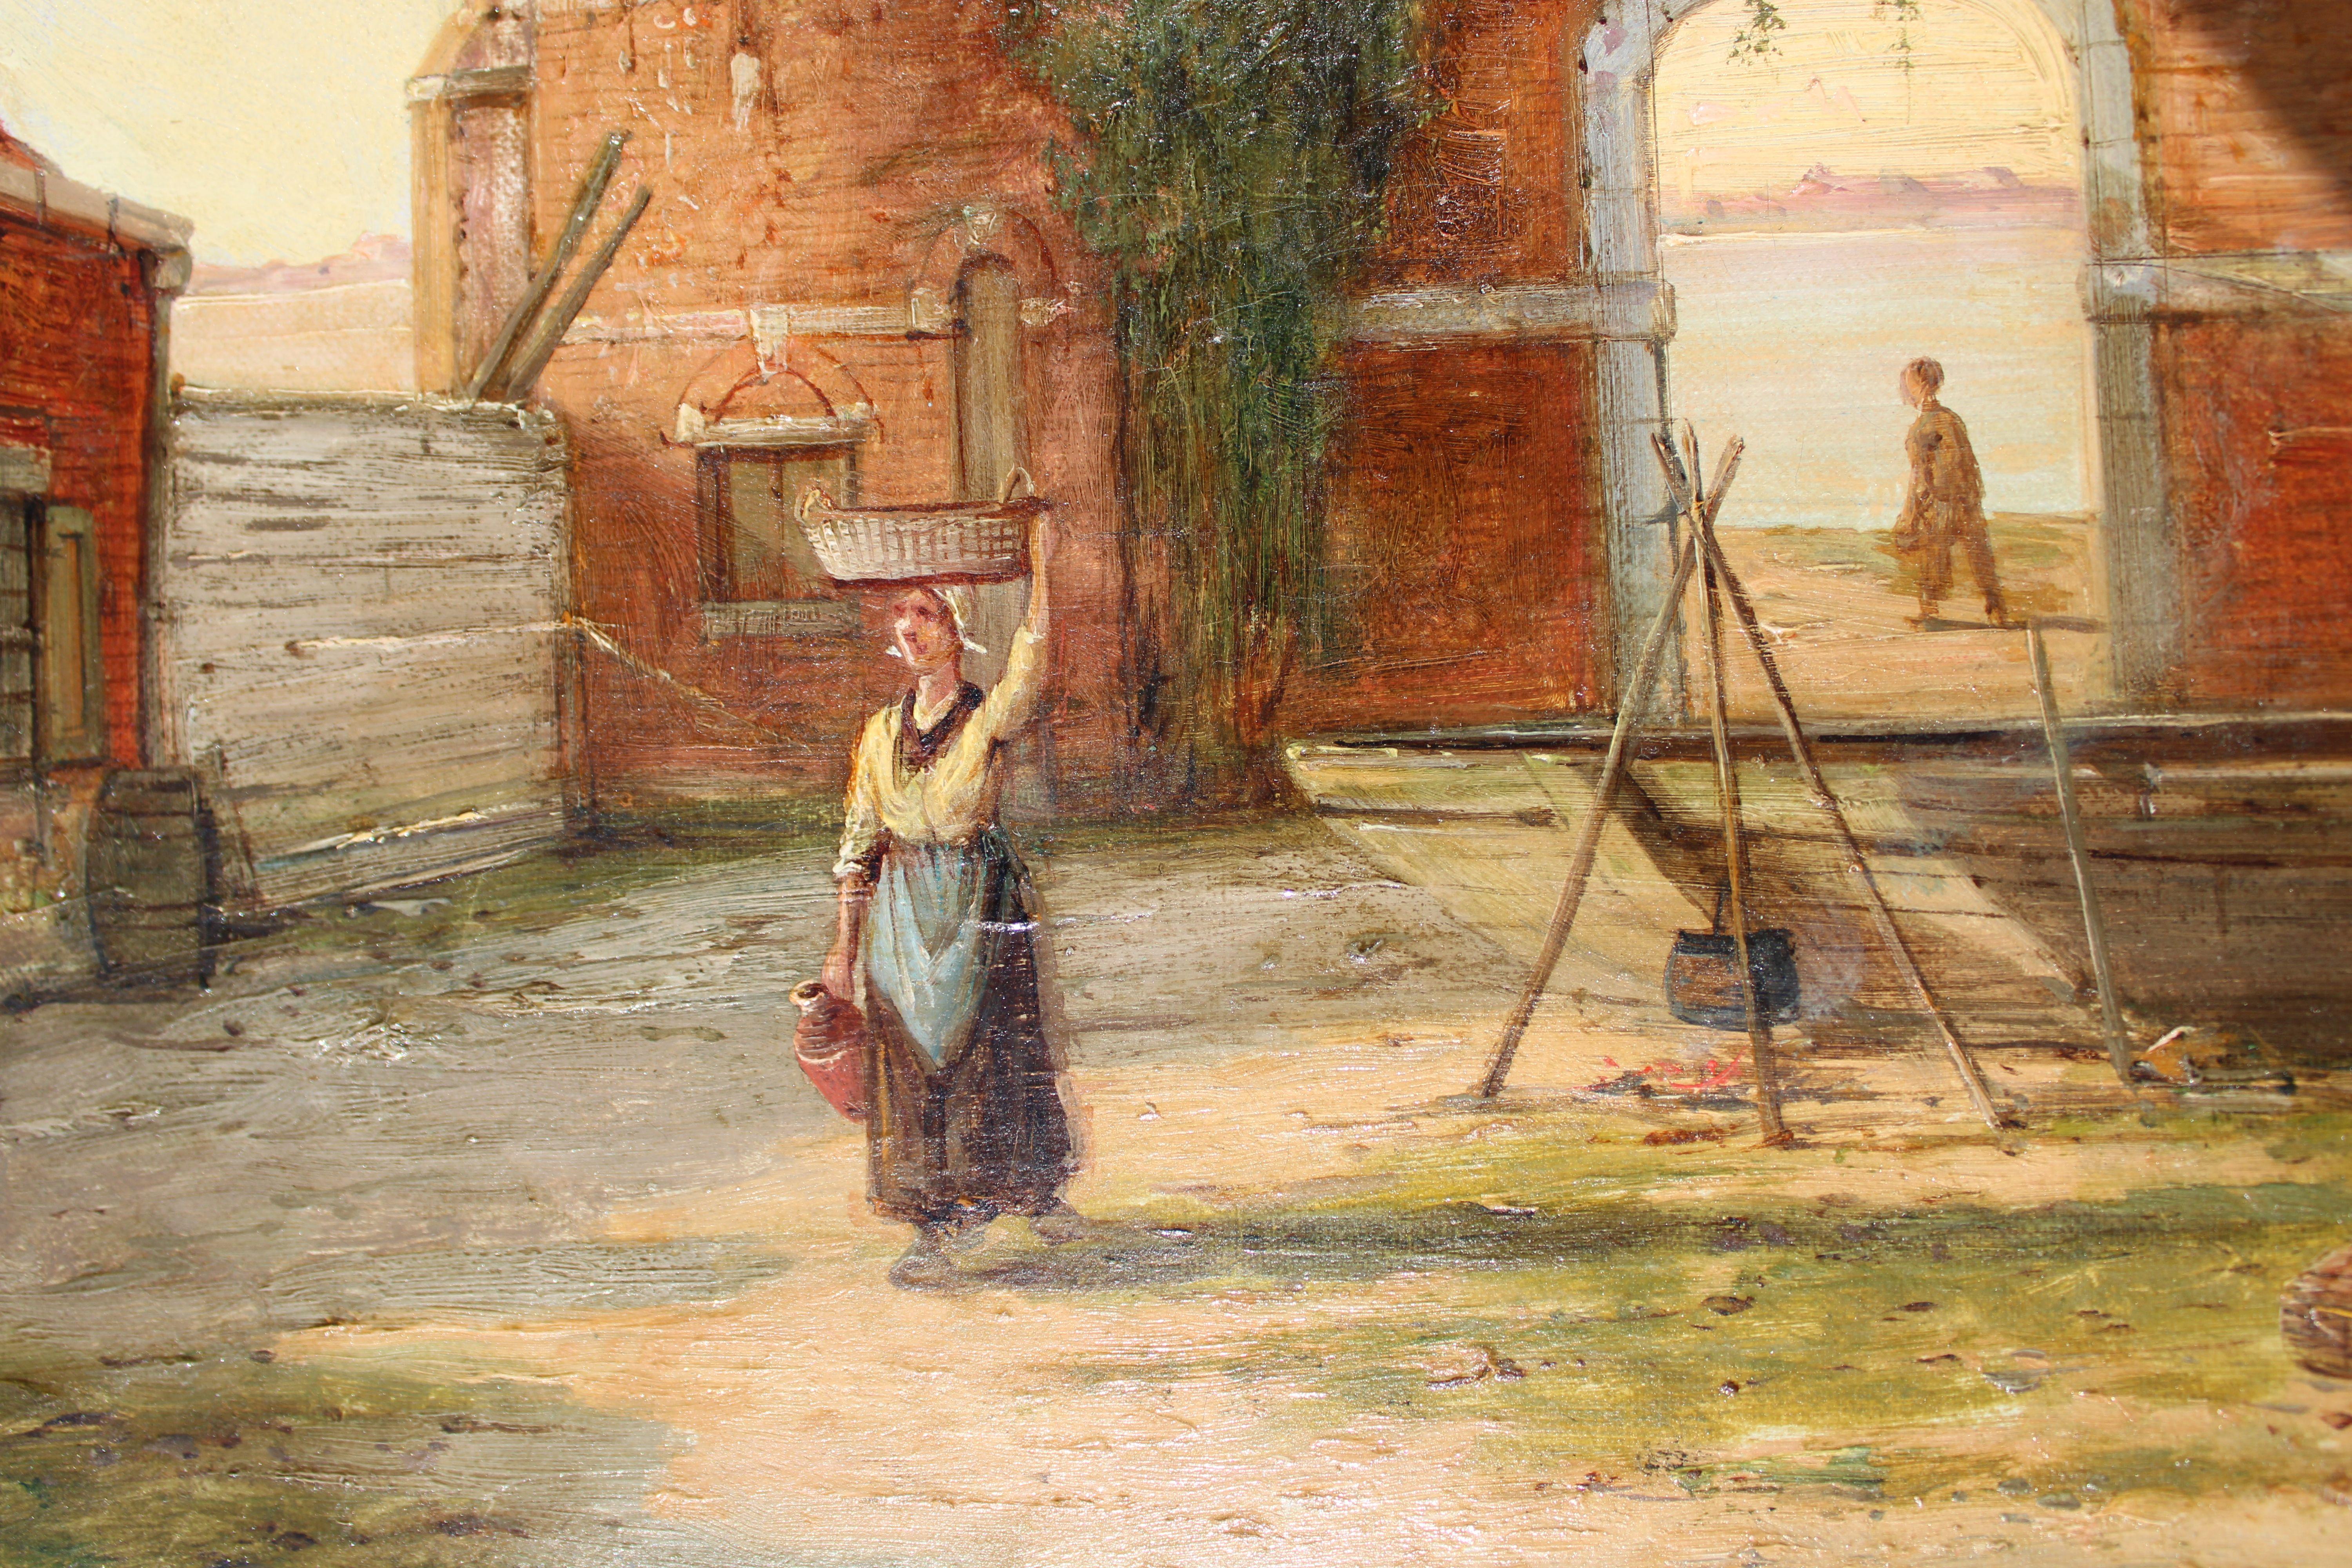 Schiedam on the Scheldt, Holland  Oil on canvas, 49.5x75 cm - Painting by Dommersen, William Raymond